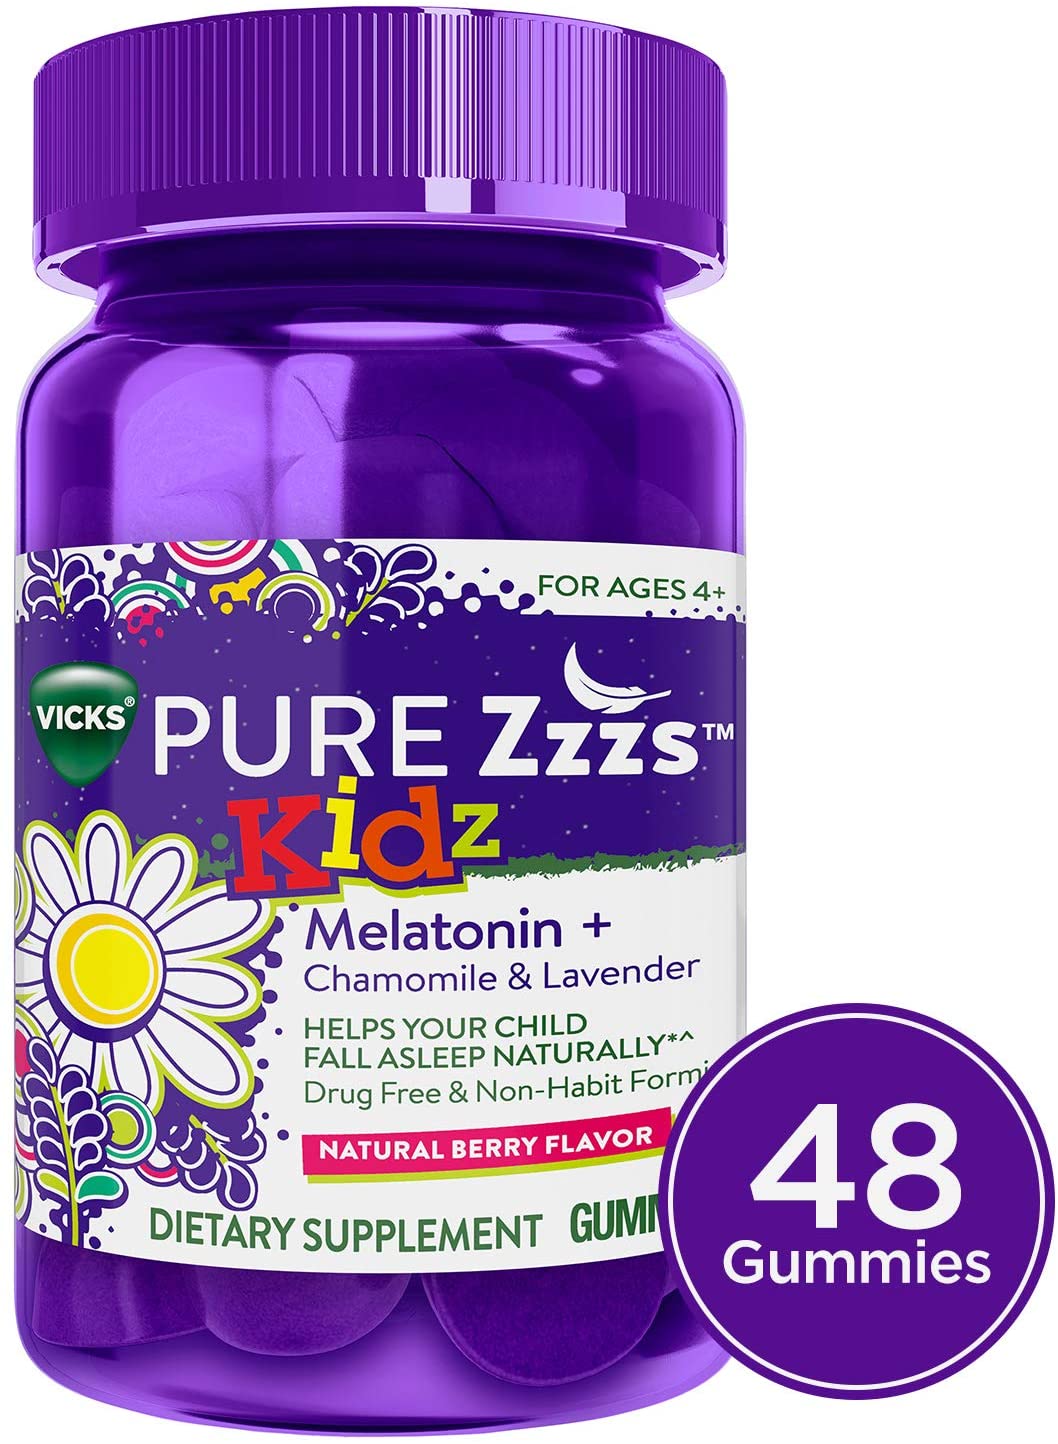 Vicks Pure Zzzs Kidz Melatonin Lavender & Chamomile Sleep Aid Gummies for Kids & Children